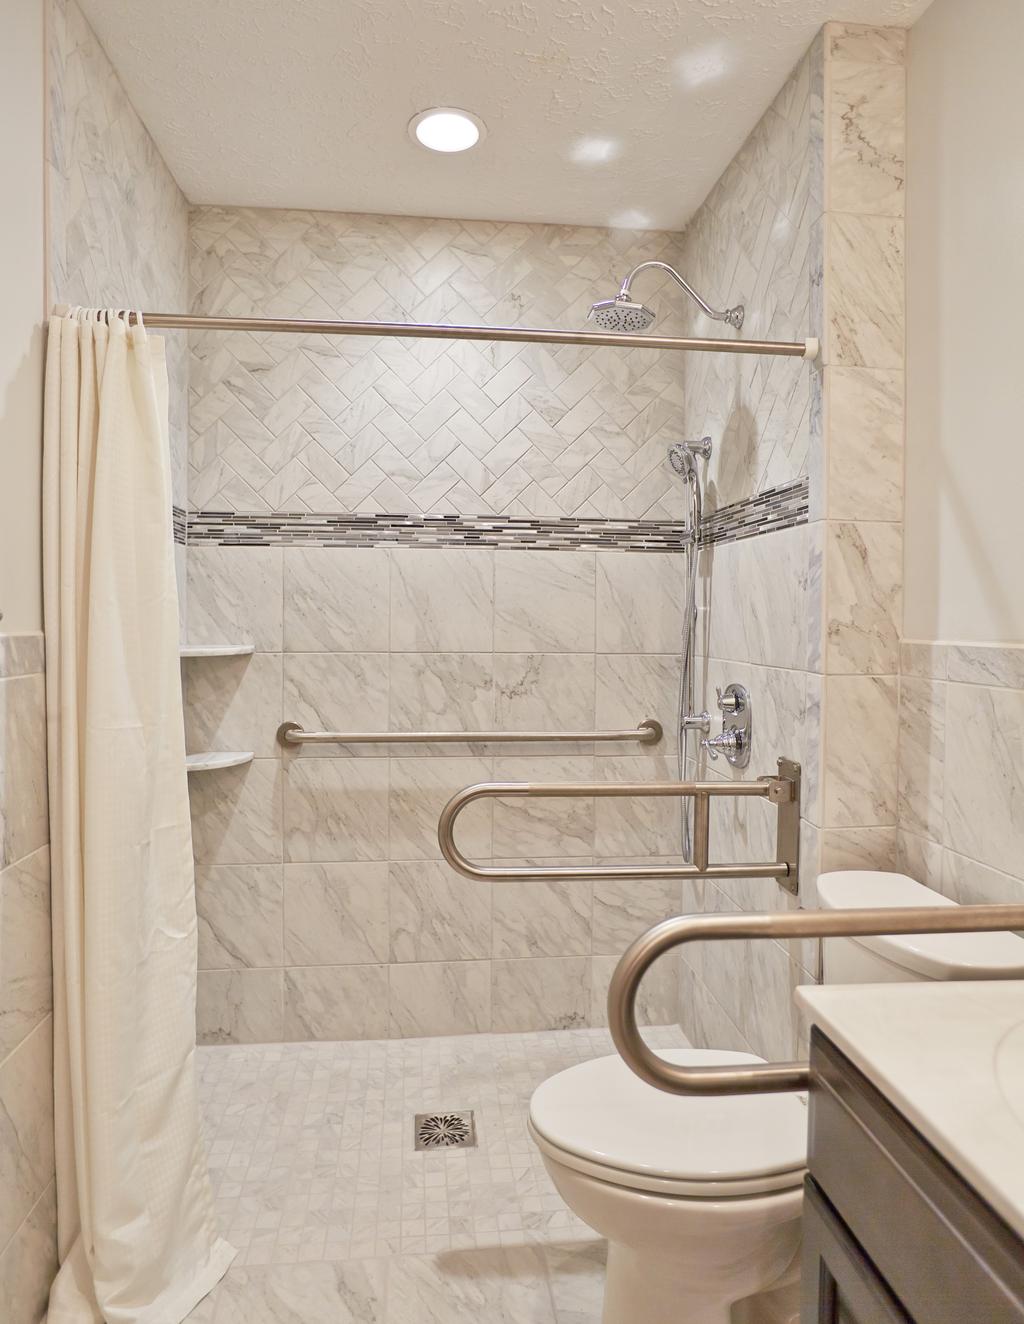 A beautiful, accessible Level Entry Shower designed and installed by SRE, Salem, VA. www.solidrockenterprises.